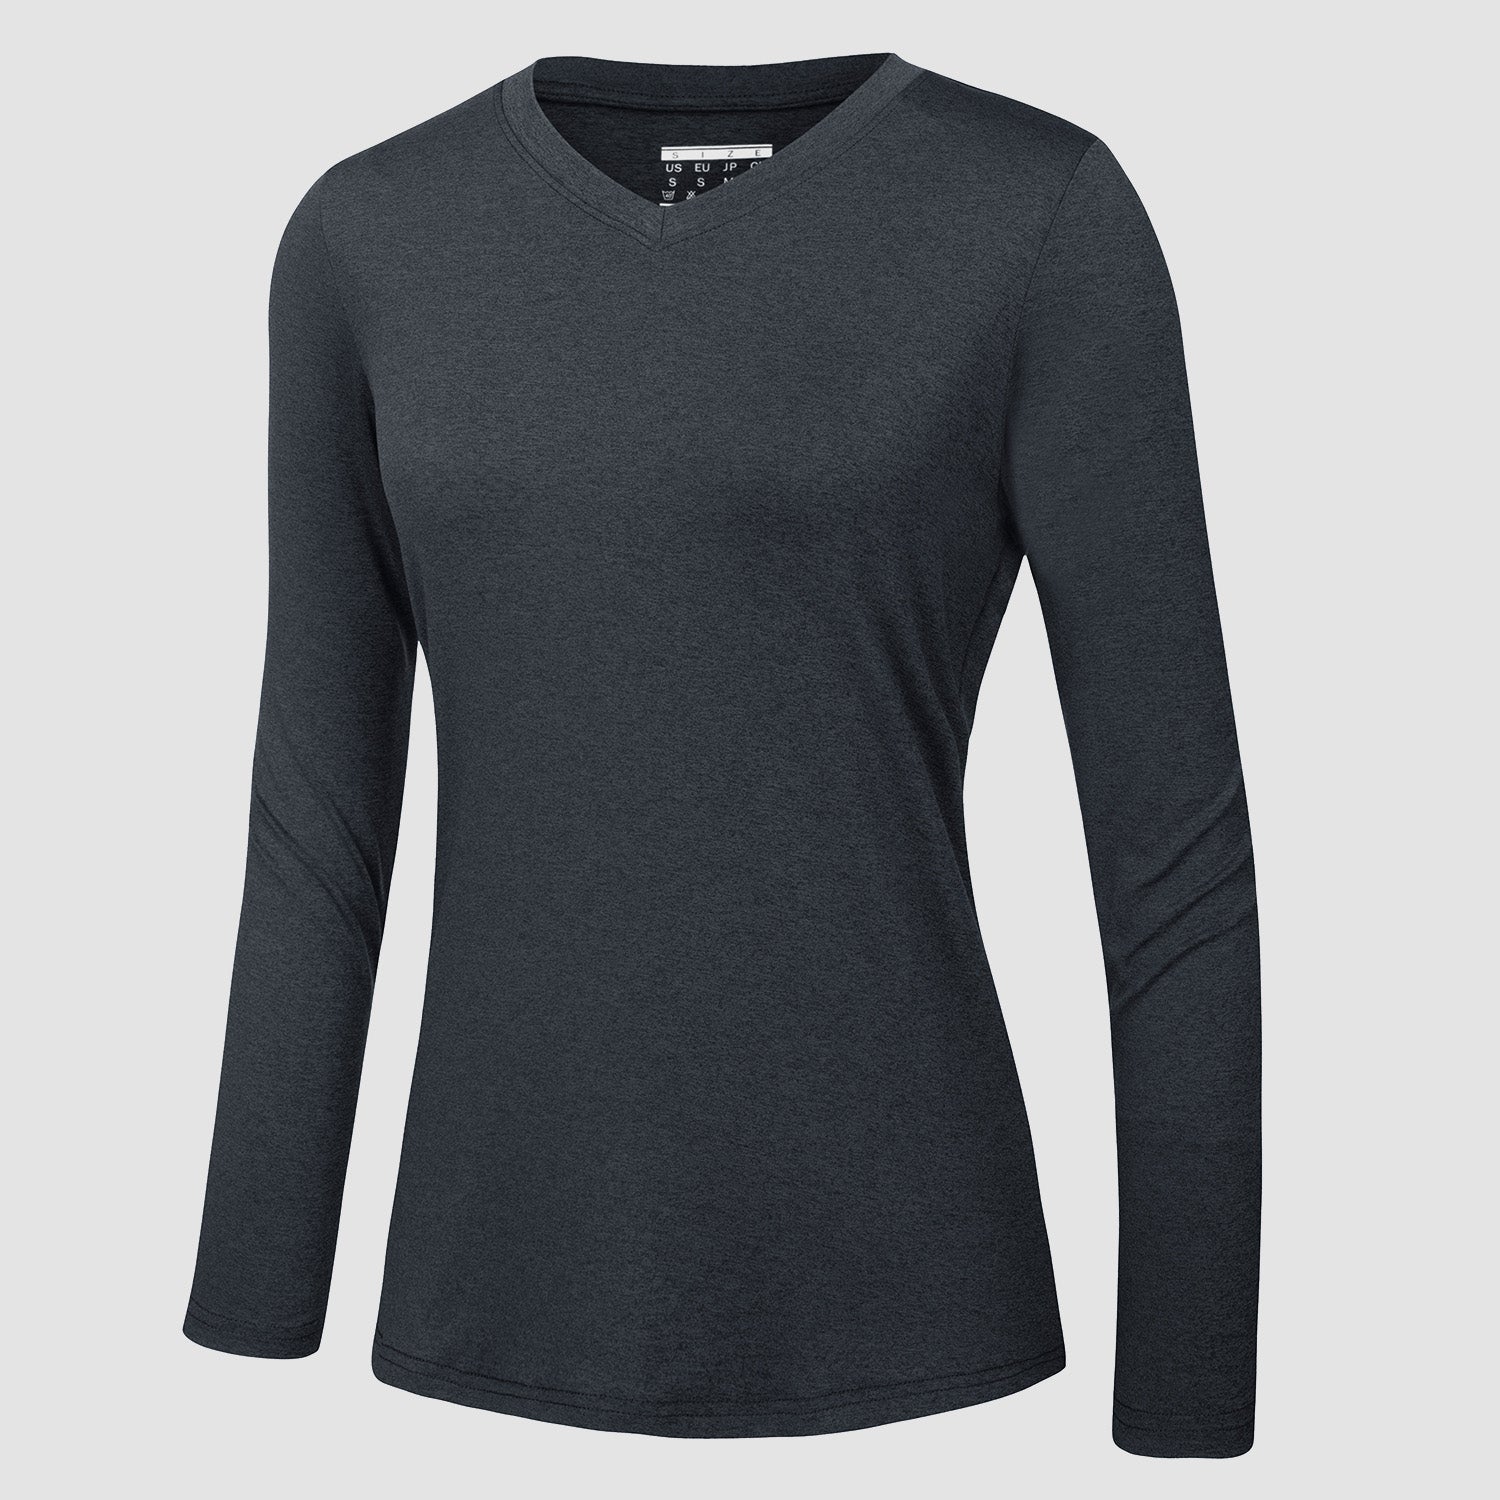 Women's Long Sleeve Shirt V Neck SPF Shirts UPF 50+ Quick Dry Workout Hiking Tee Shirts Rashguard, Black / M